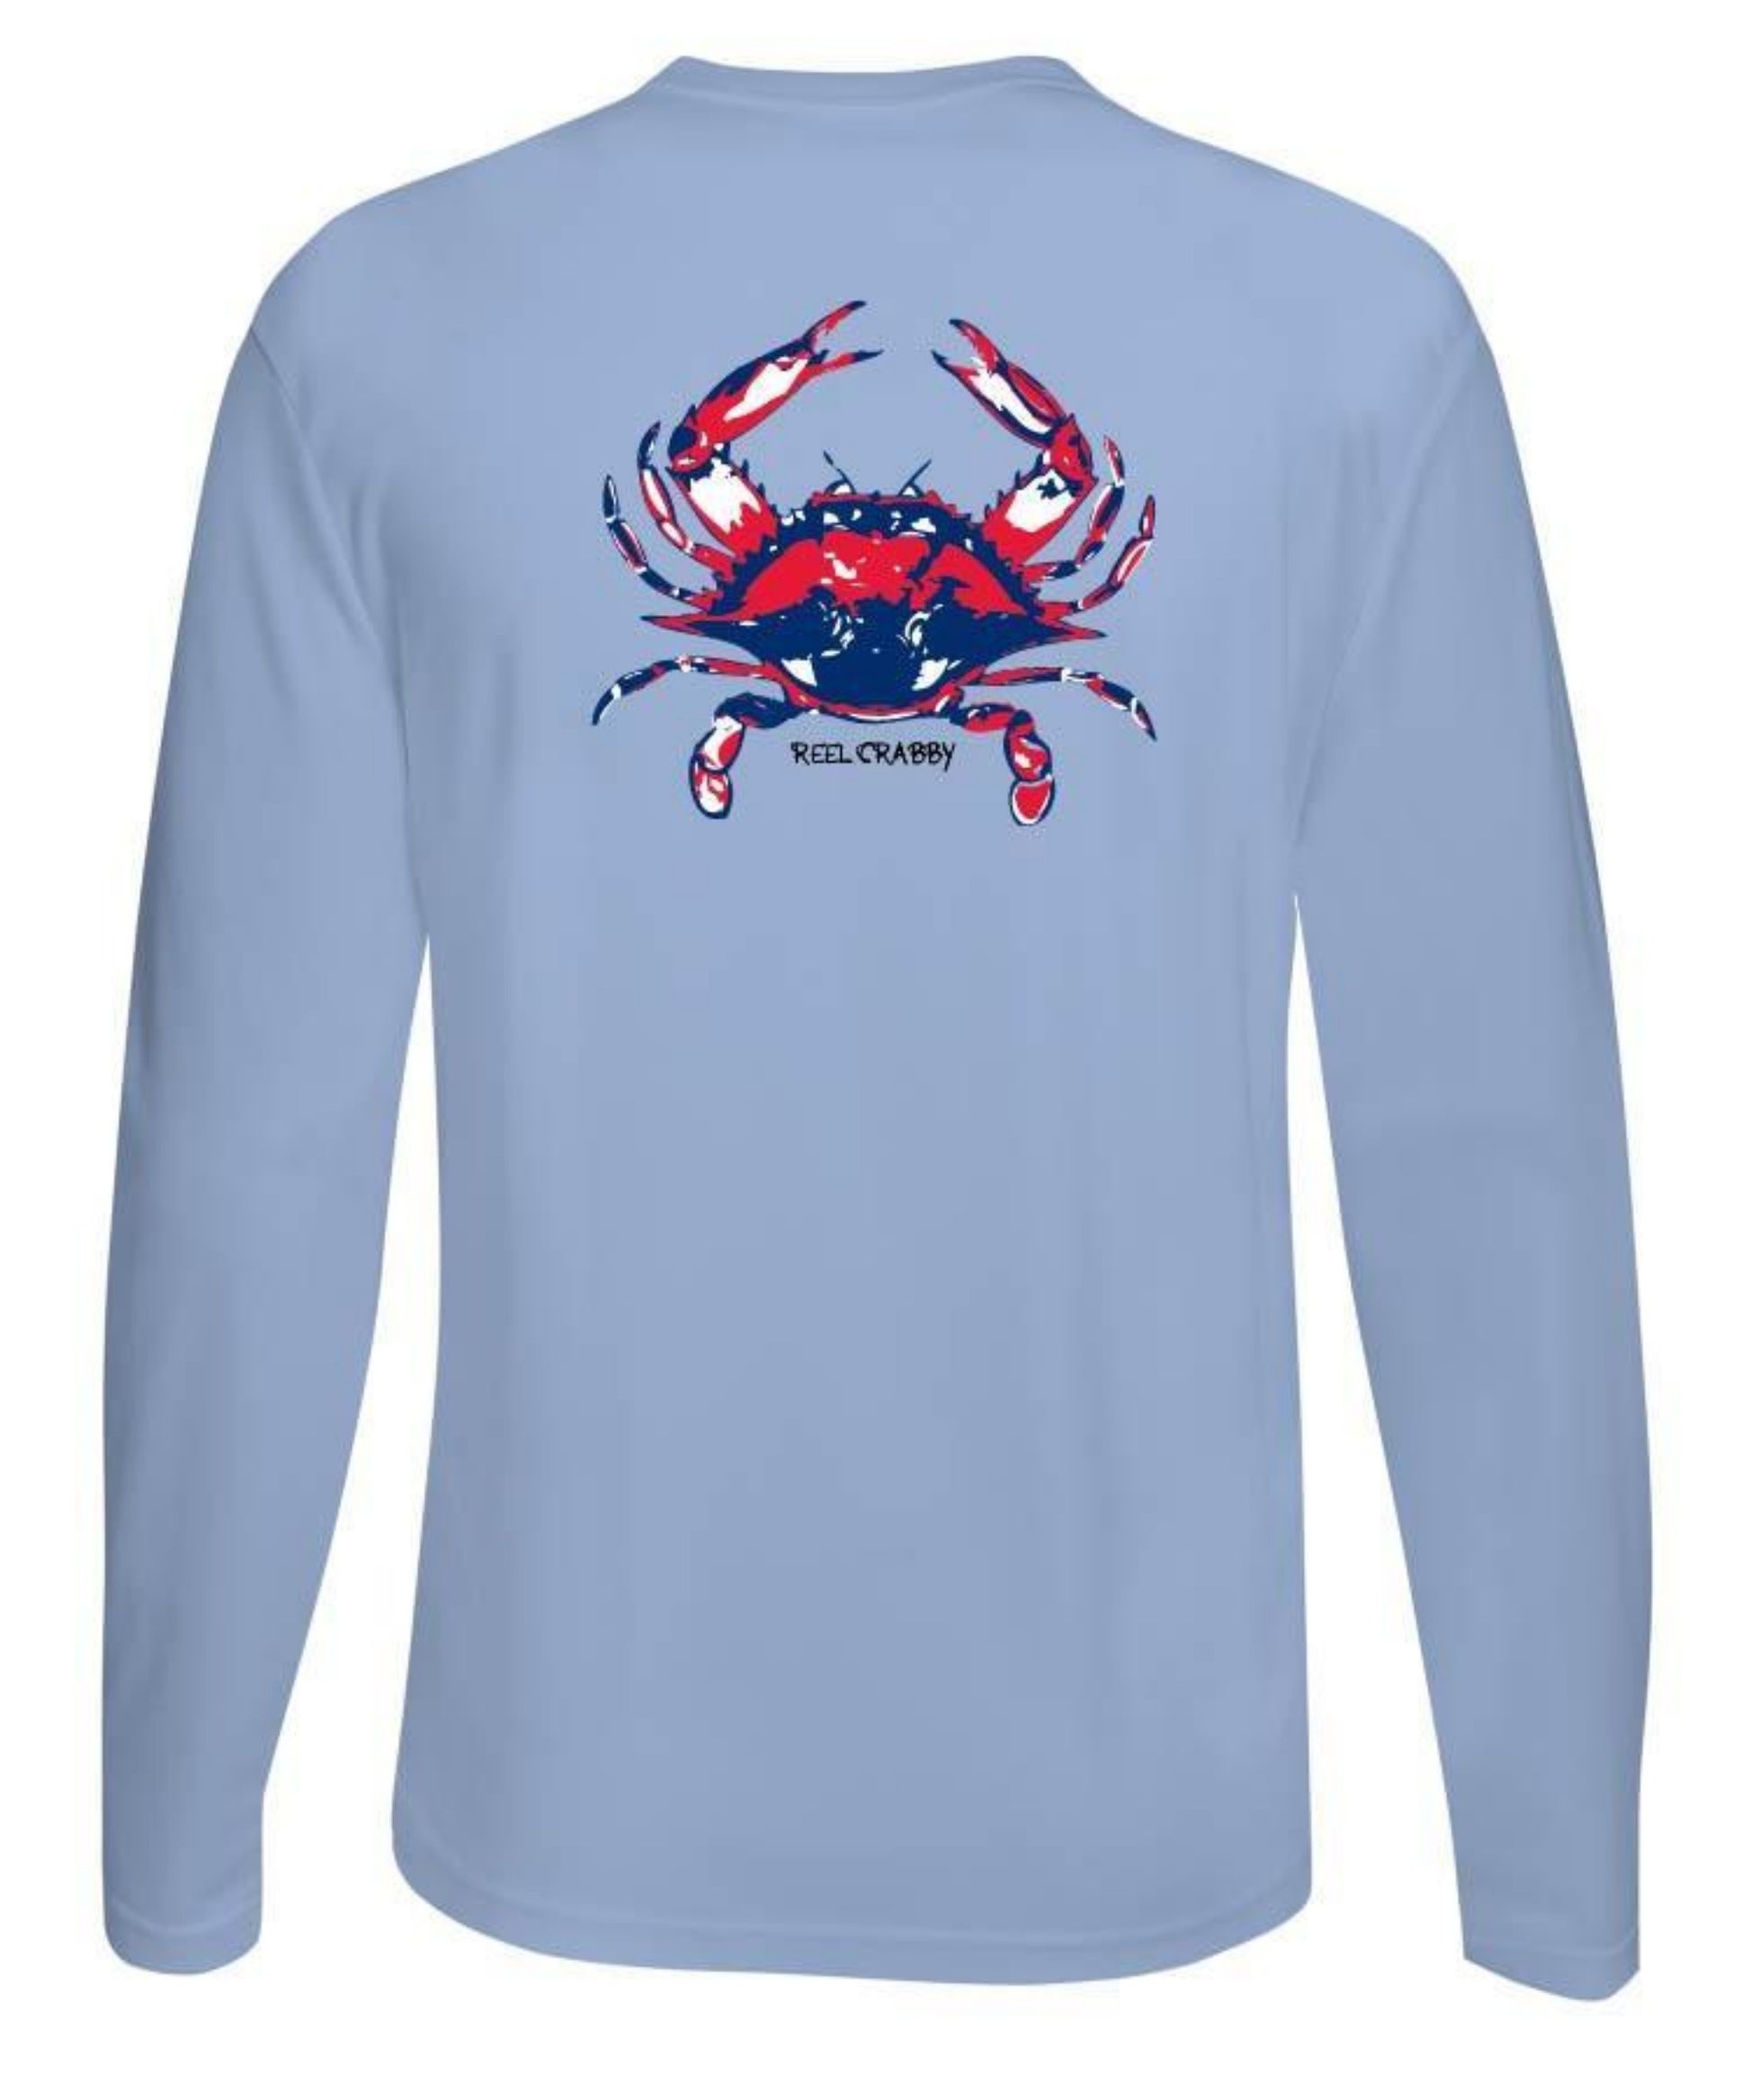 Blue Crab Reel Crabby Performance Long & Short Sleeve Shirts